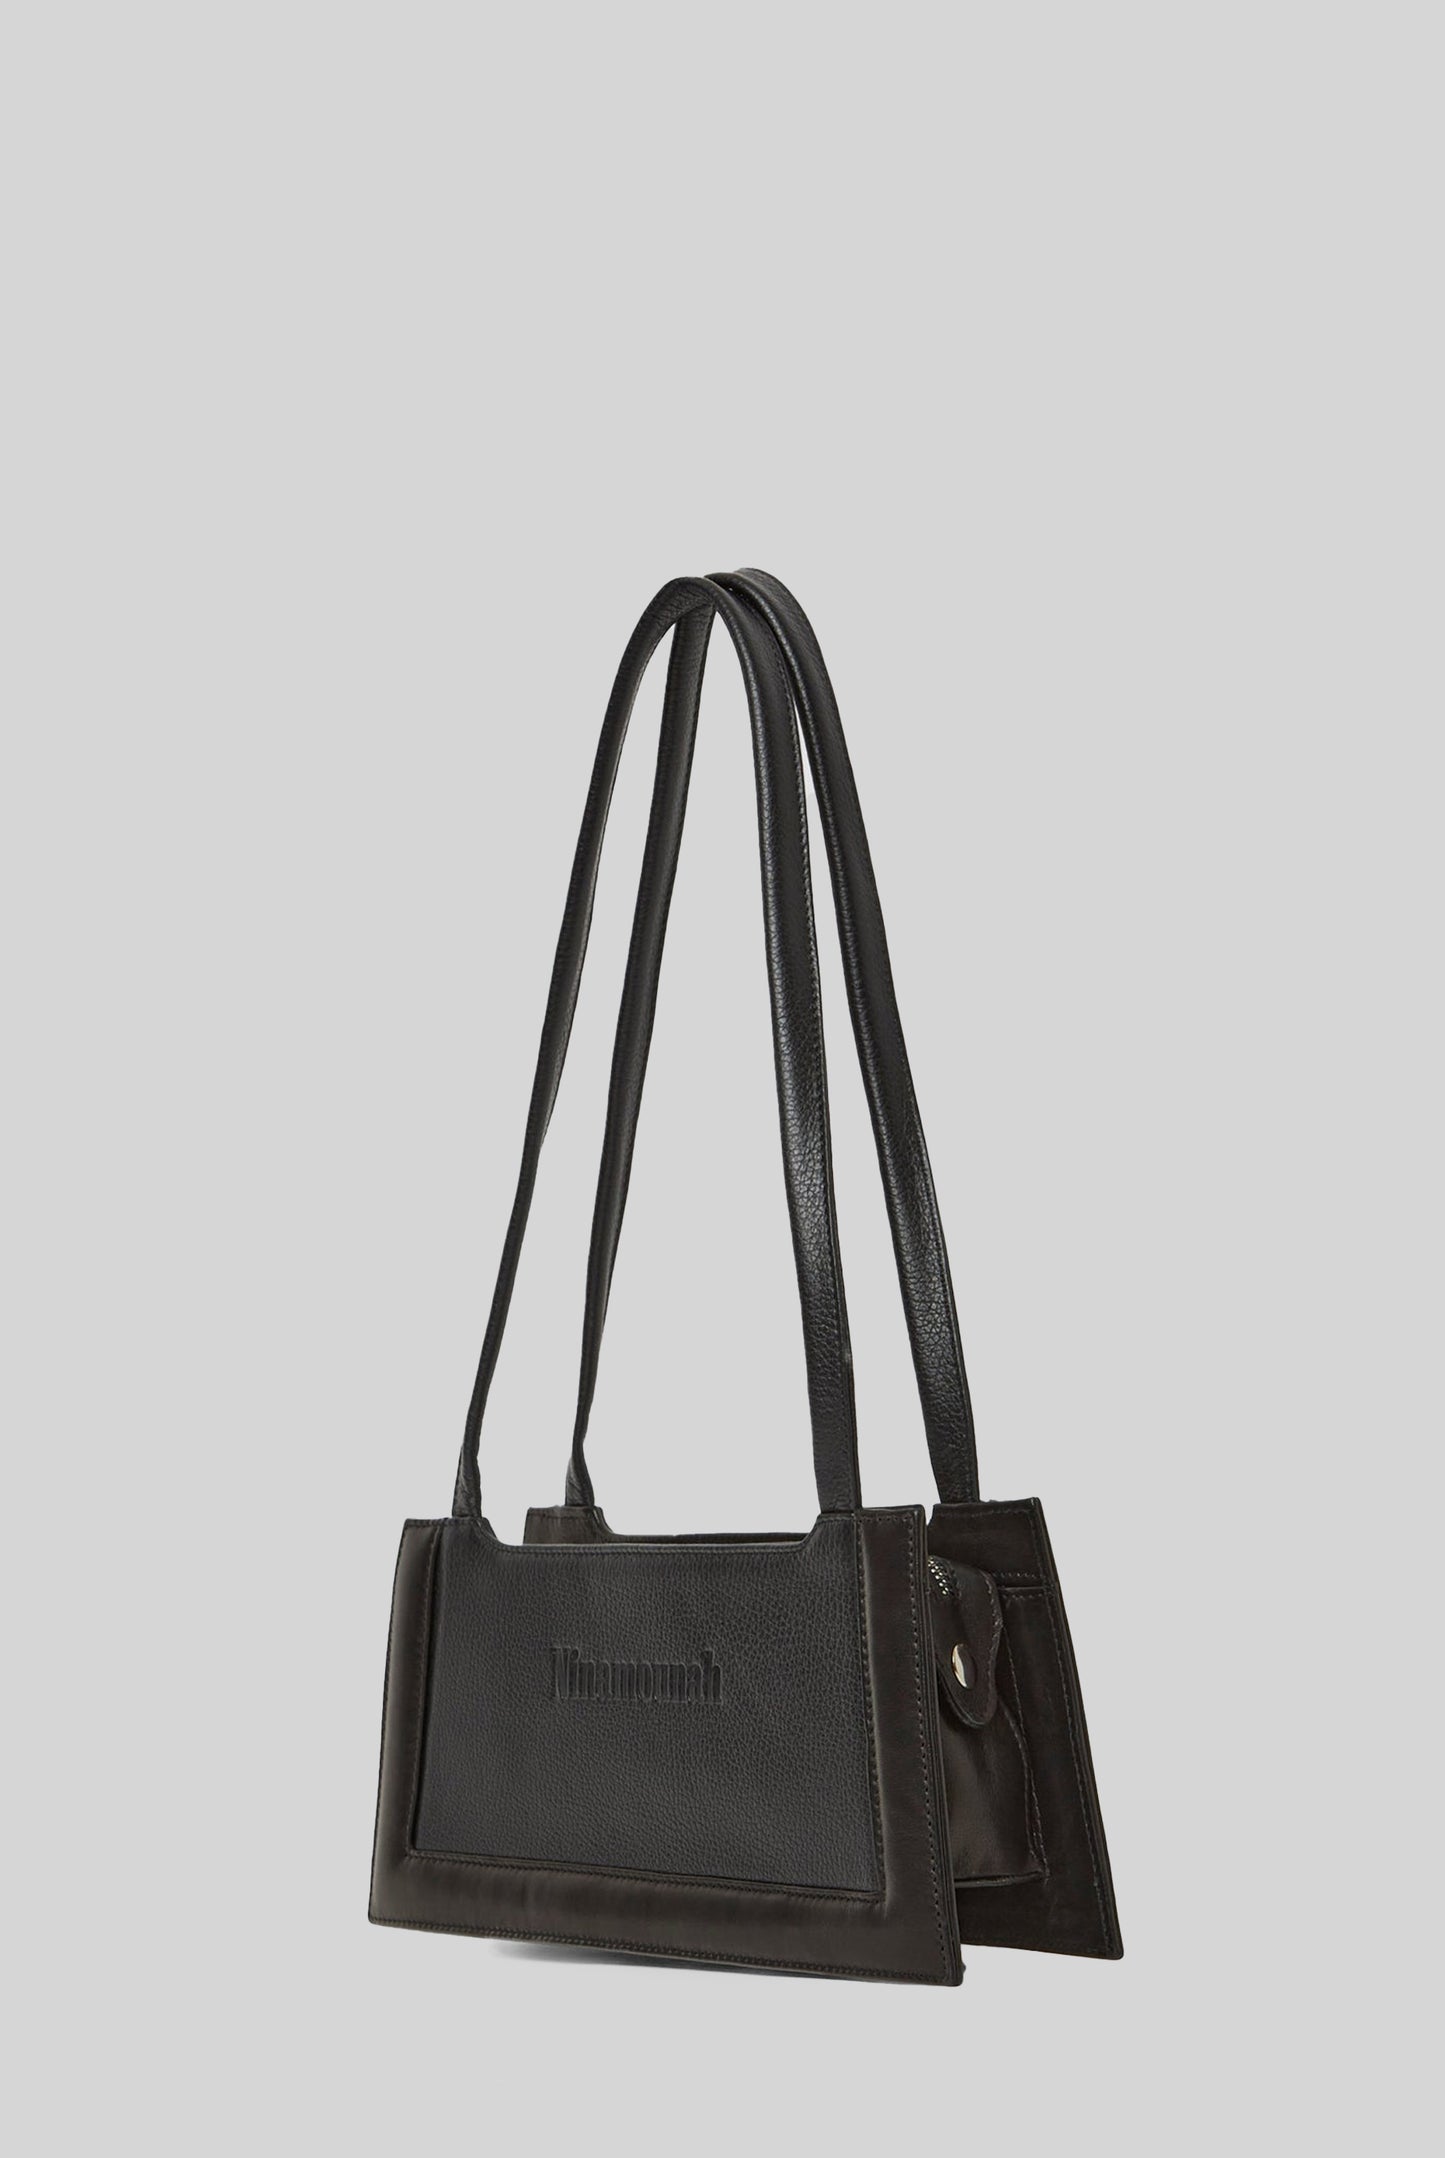 Animal Mini Leather Shoulder Bag in Black/Black